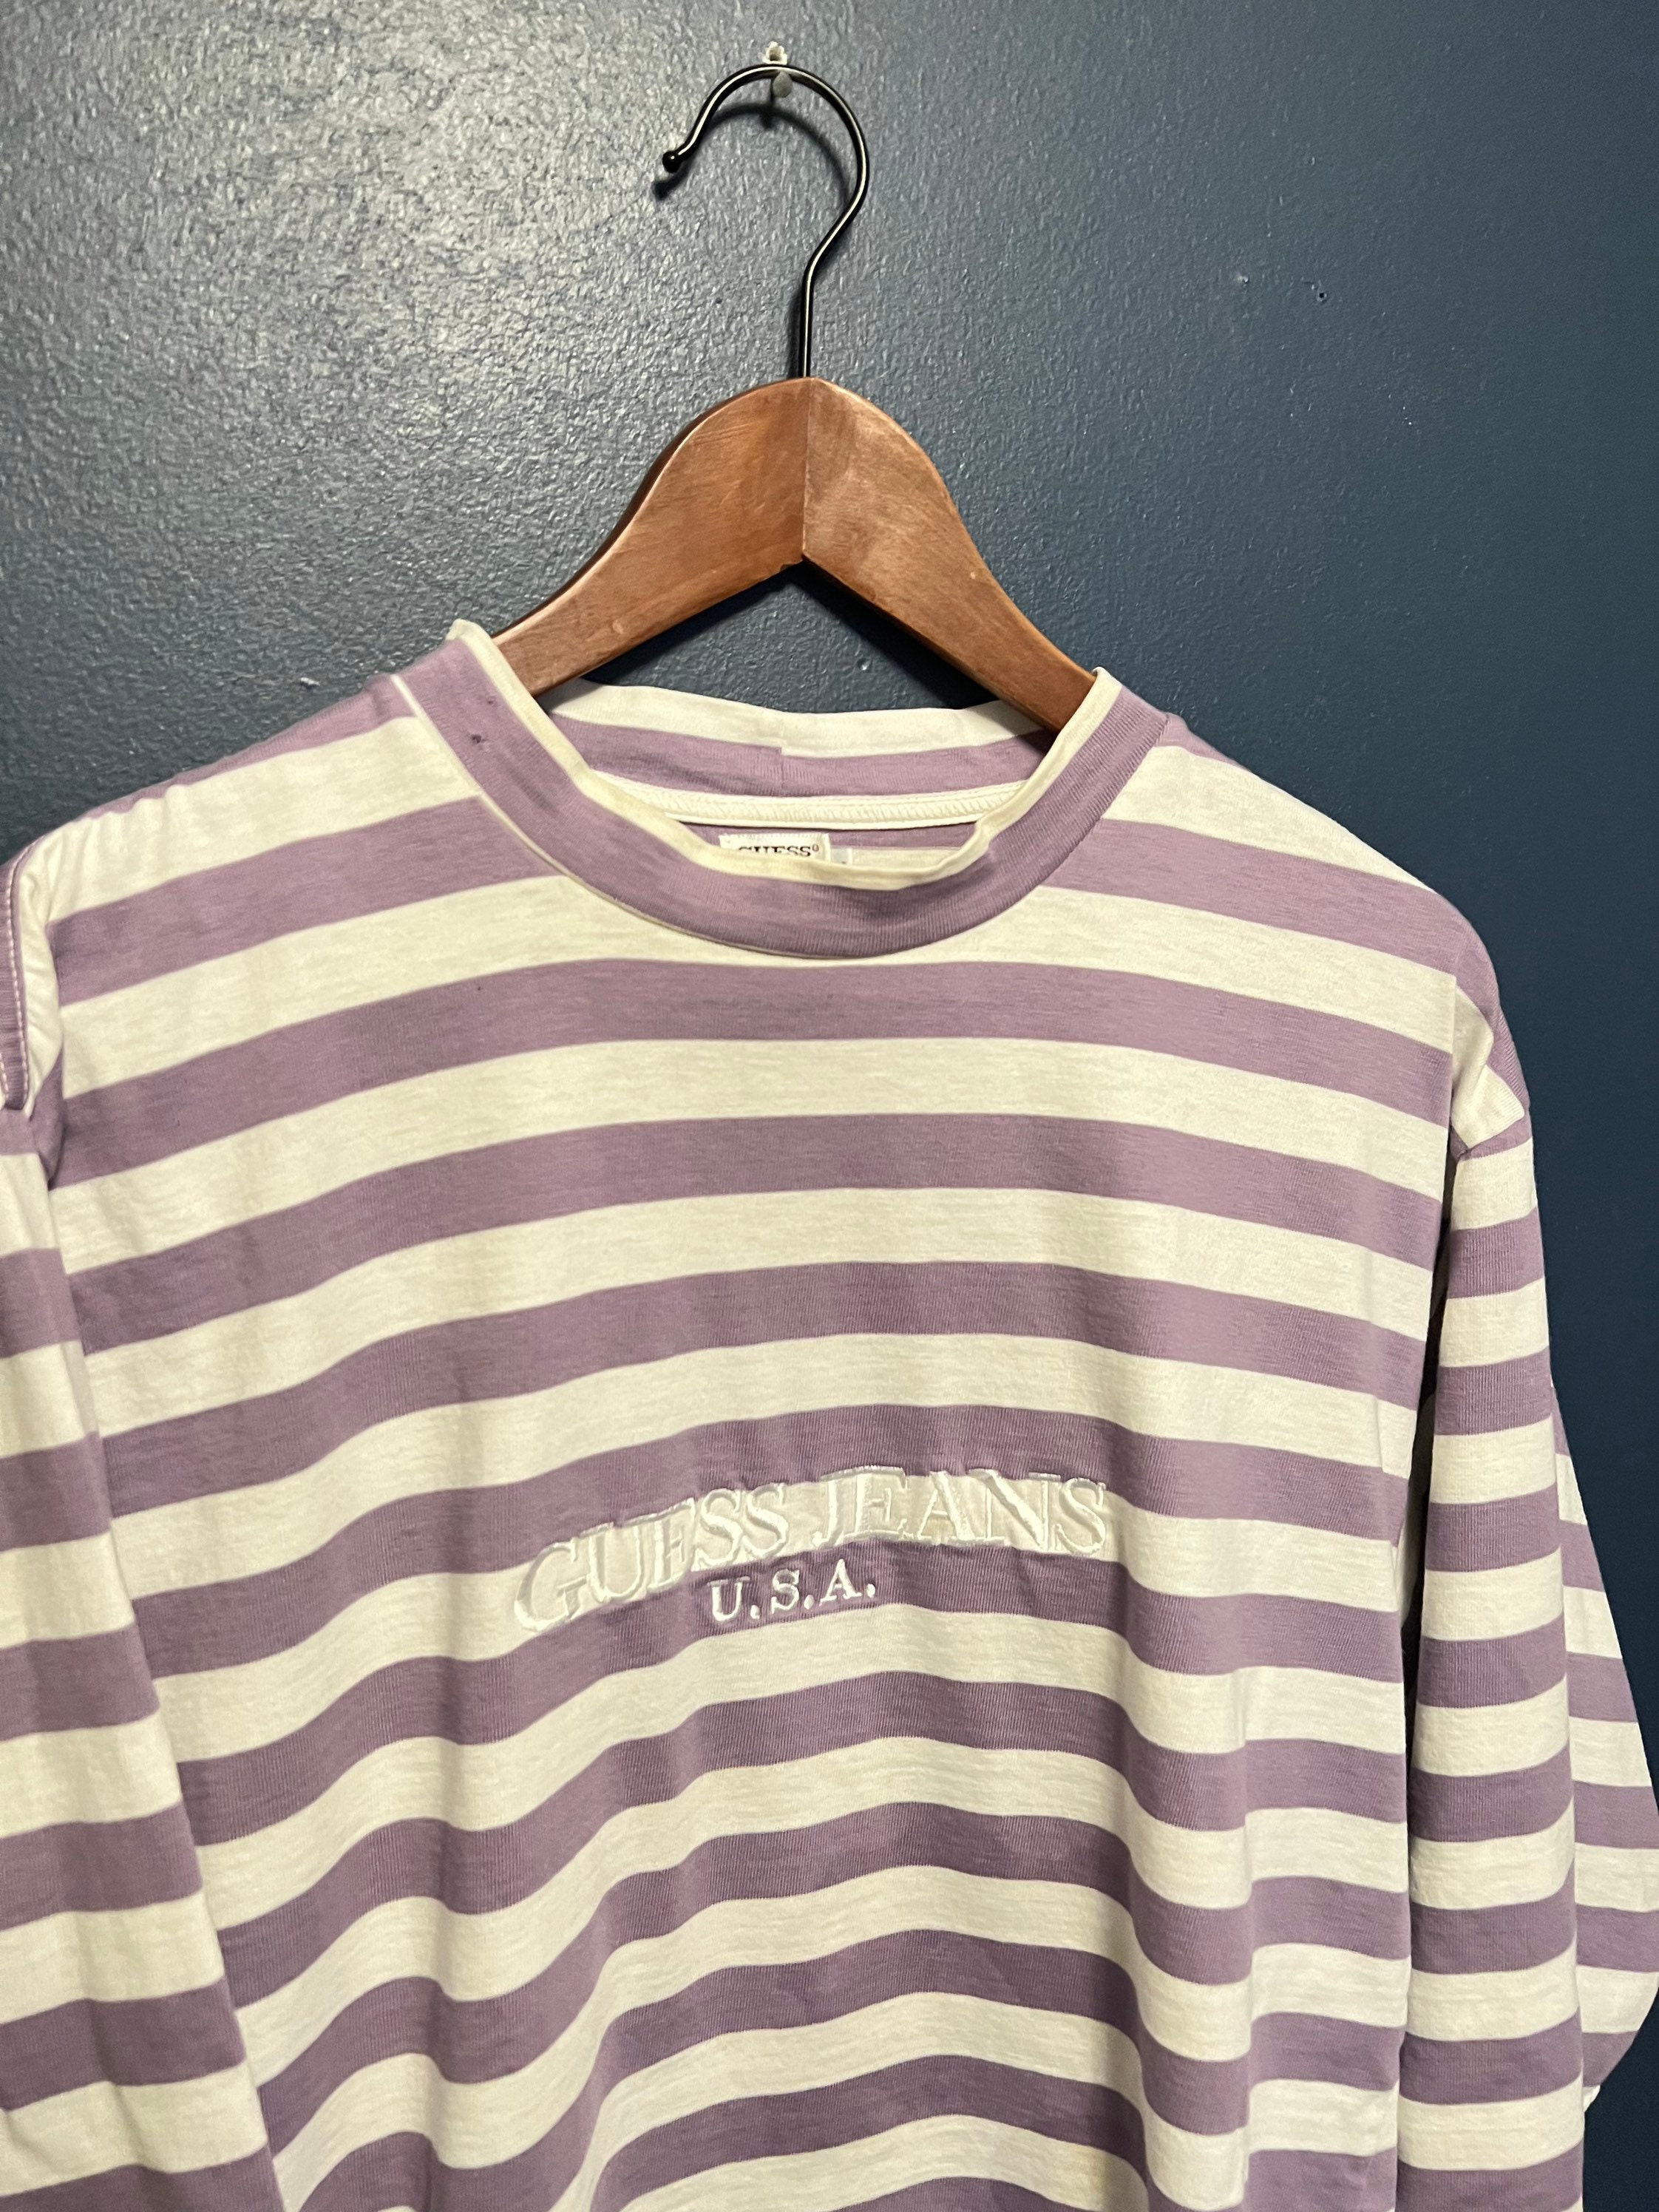 Guess Stripes Shirts - Etsy